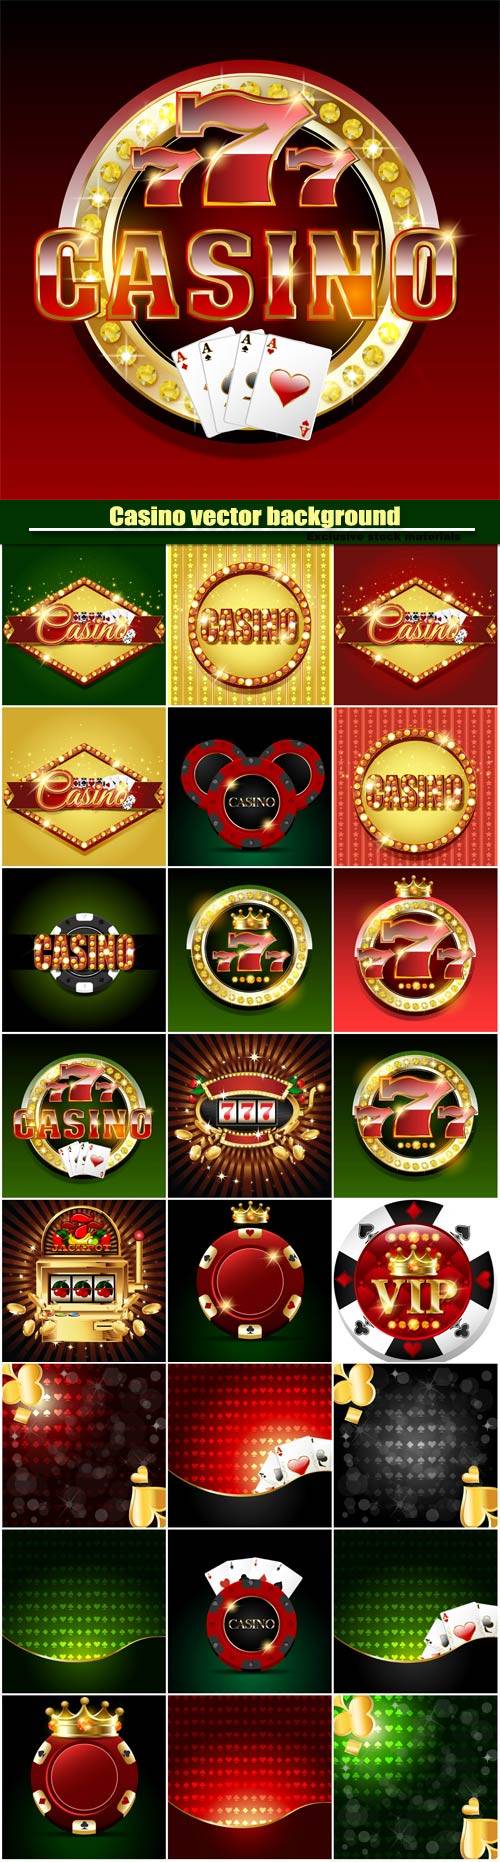 Casino vector background, slot machine on shiny background